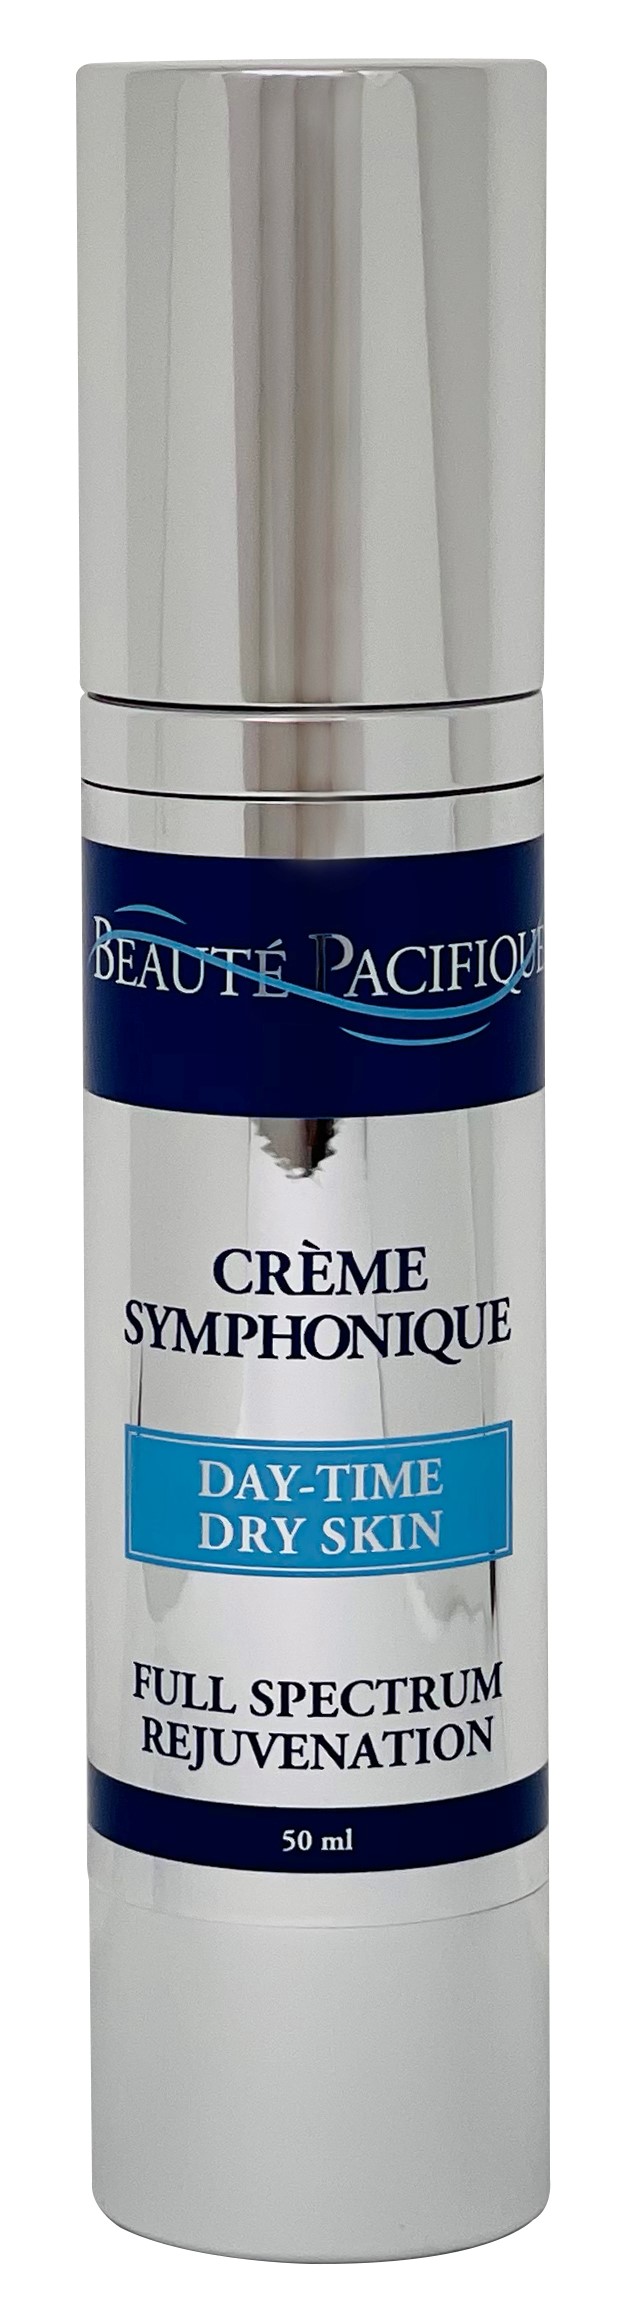 Créme Symphonique Day-Time Dry Skin Full Spectrum